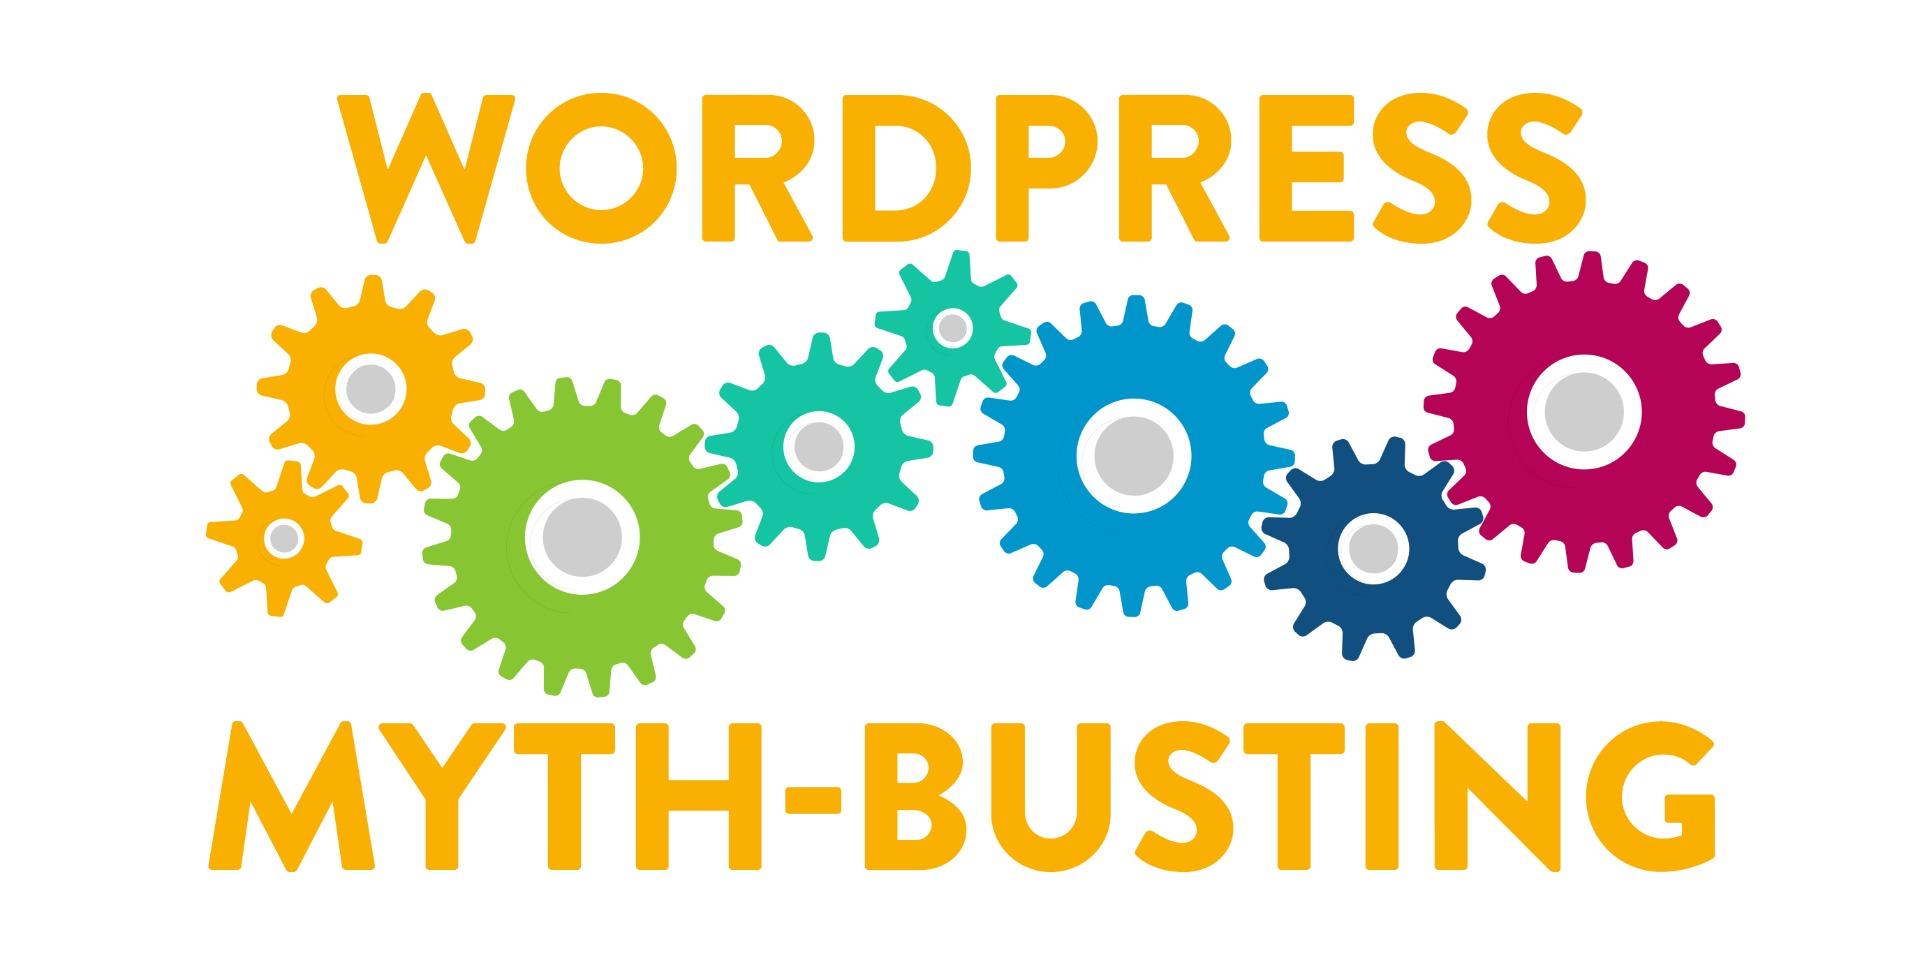 WordPress Myth-Busting